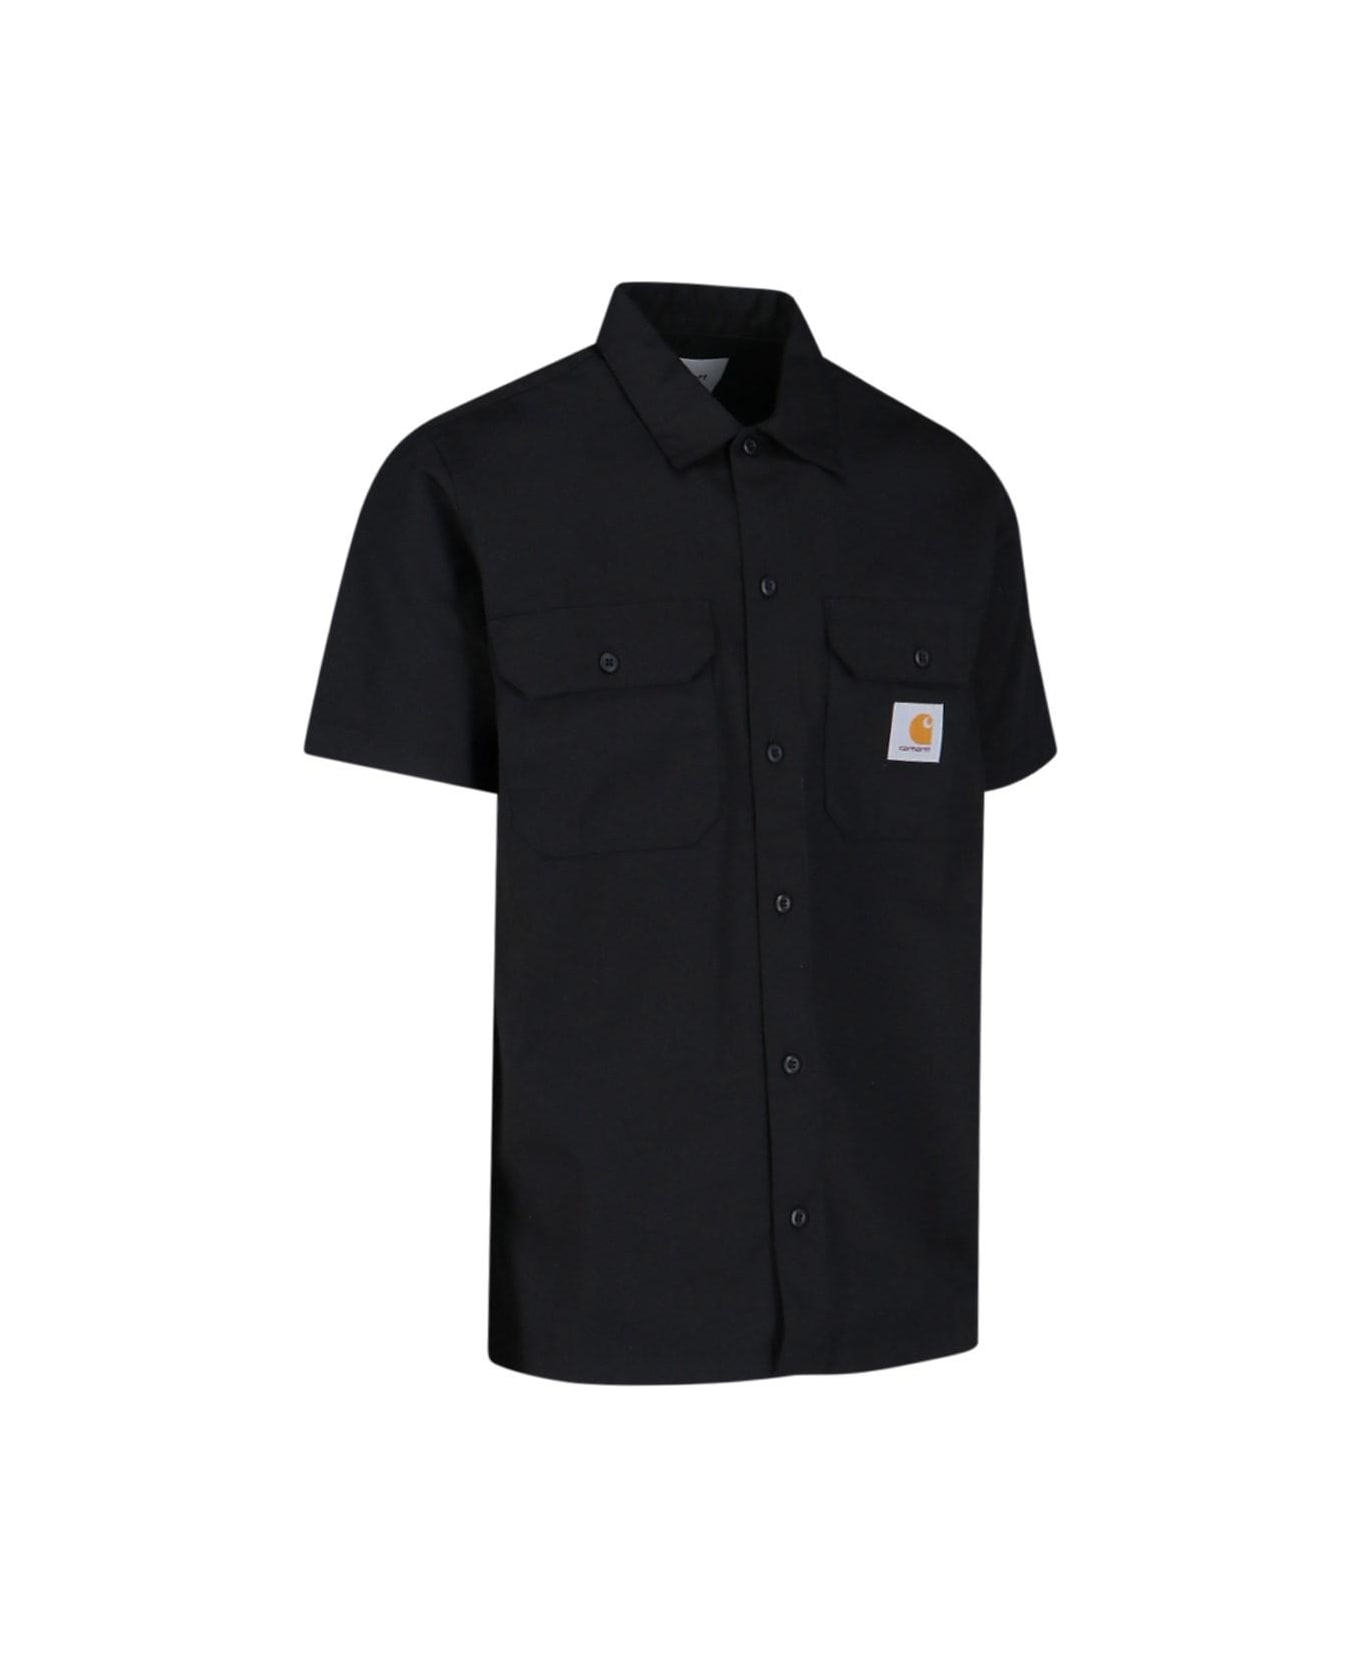 Carhartt Short-sleeved Shirt - Xx Black